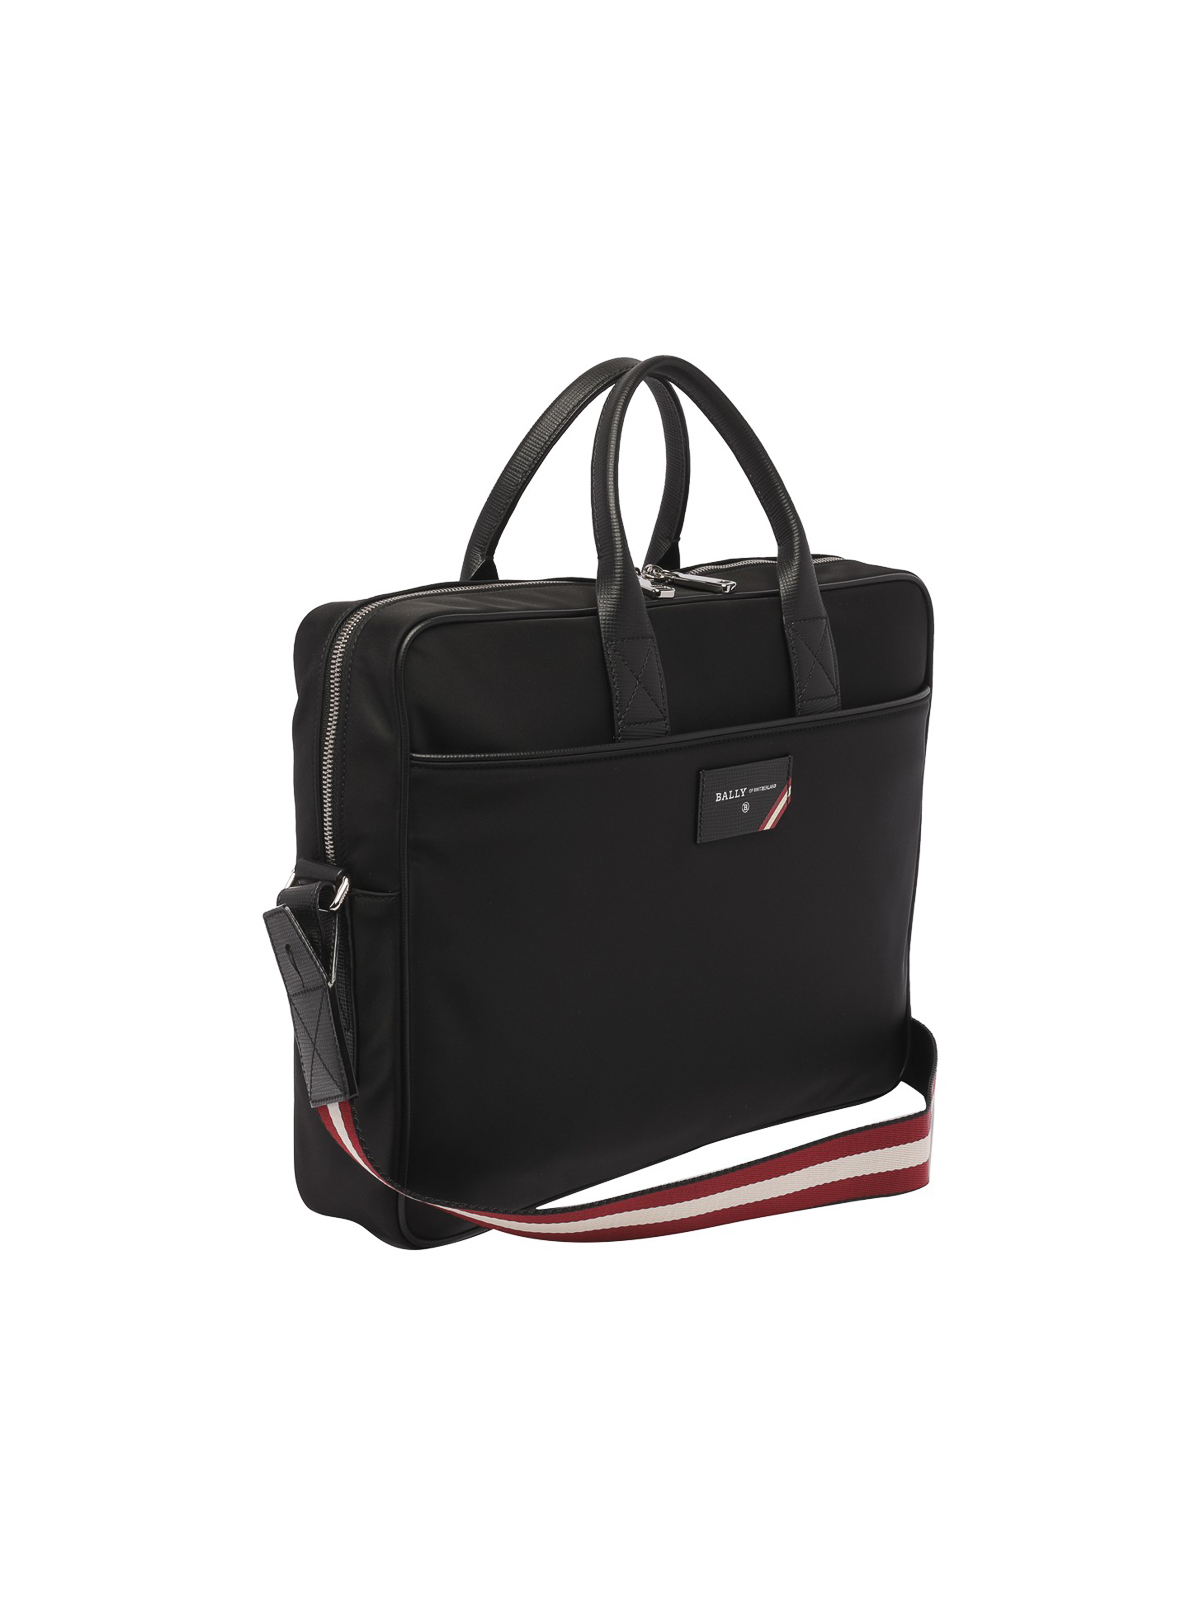 Laptop bags & briefcases Bally - Faldy briefcase - FALDYF000 | iKRIX.com